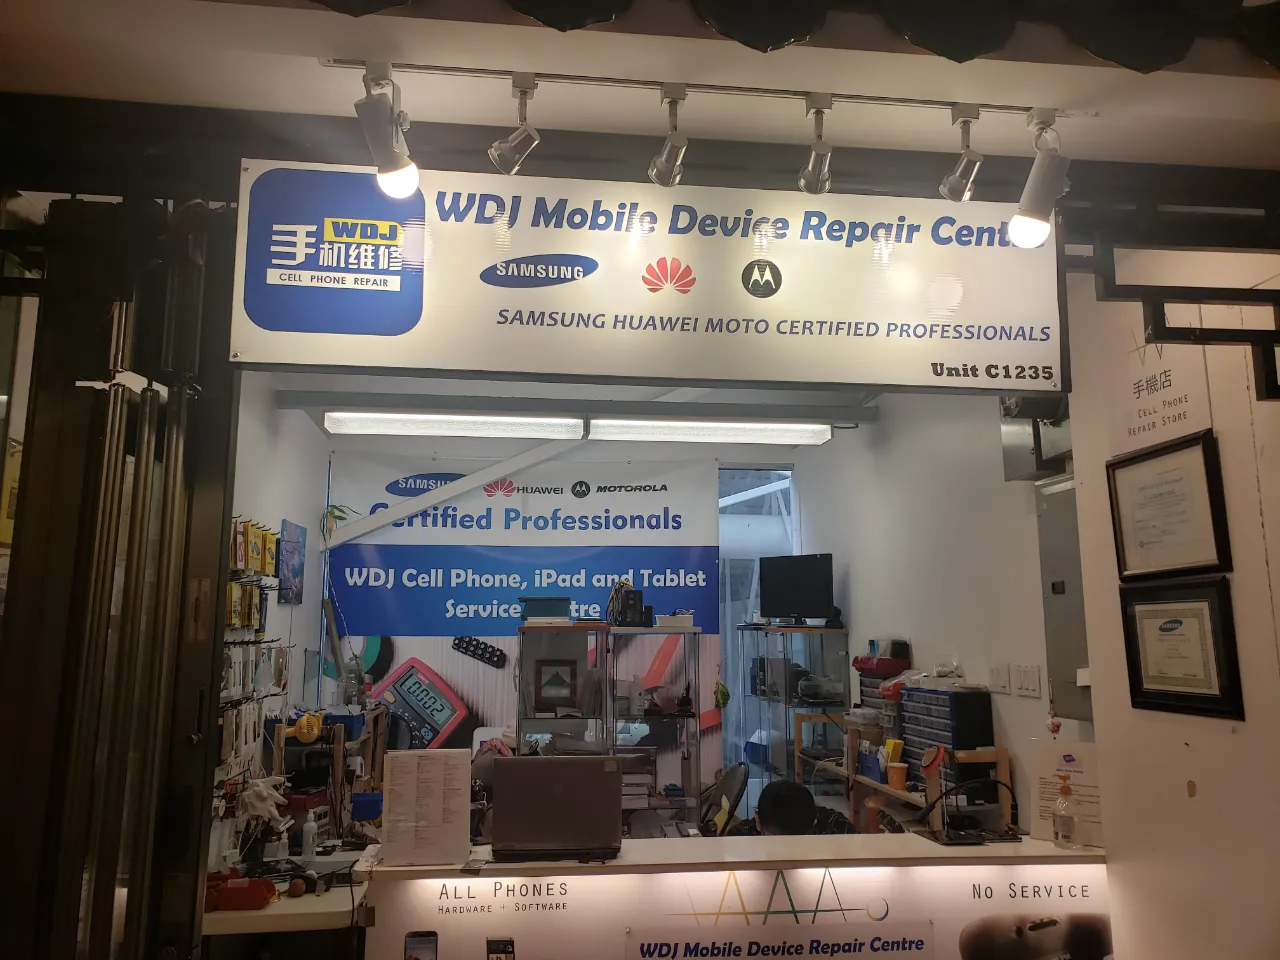 WDJ Mobile Device Repair Centre